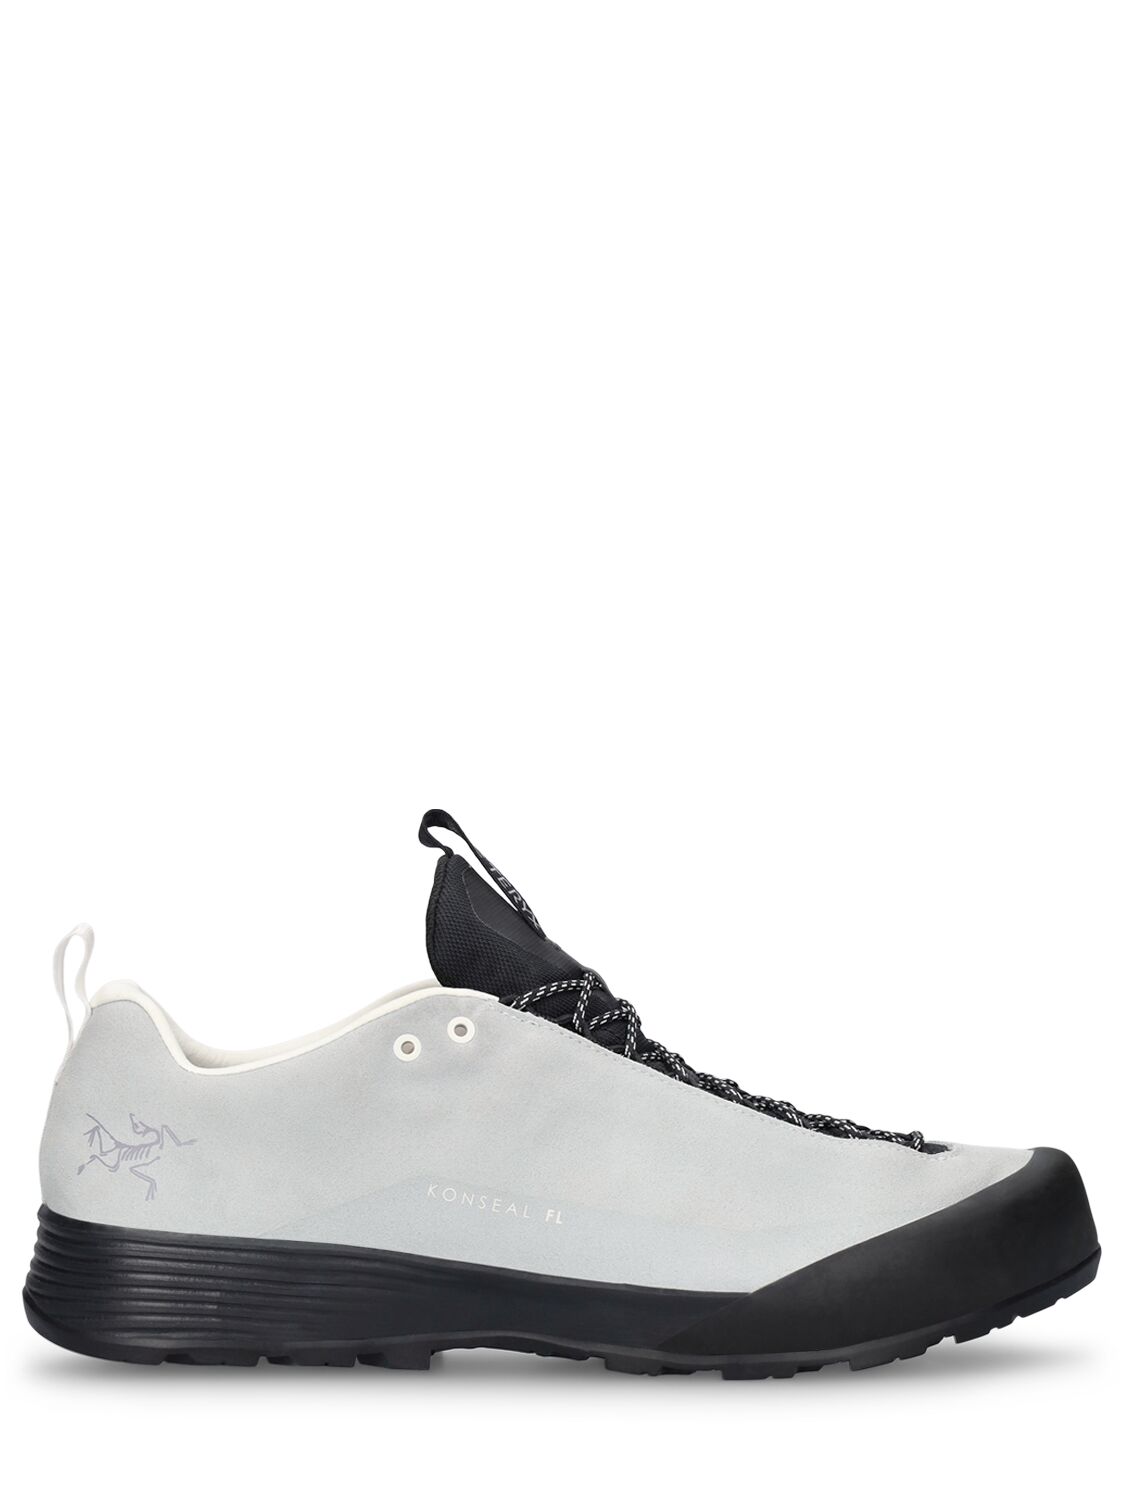 Arc'teryx Konseal Fl 2 Leather Gtx Sneakers In White/black